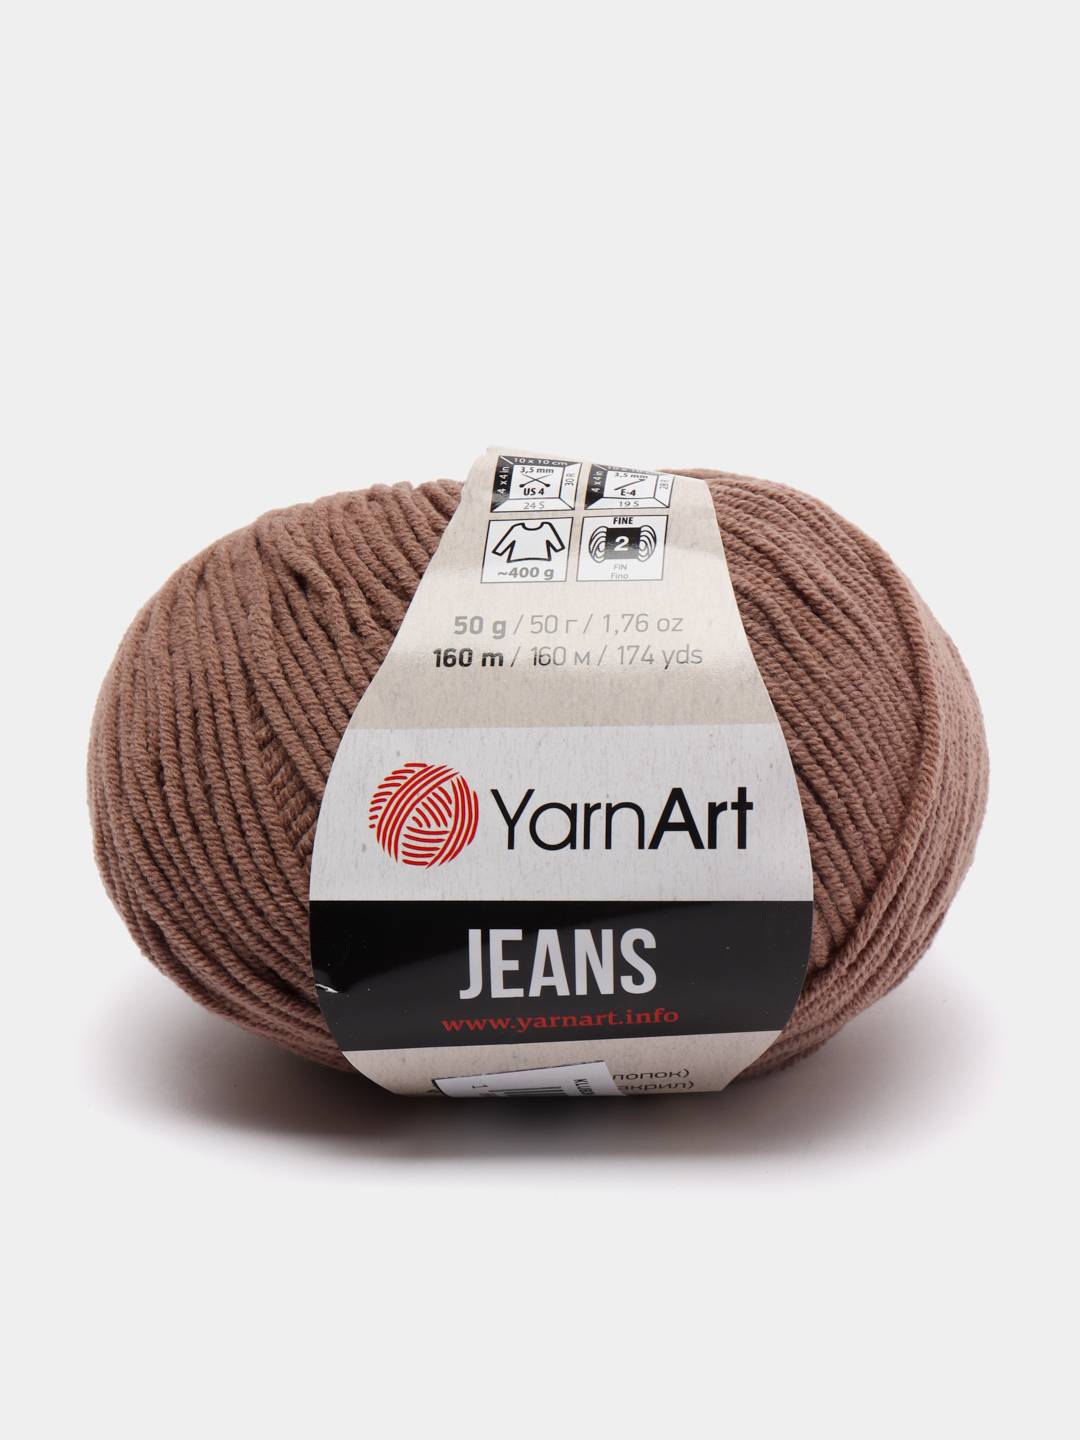 Yarnart Jeans Интернет Магазин Пряжи